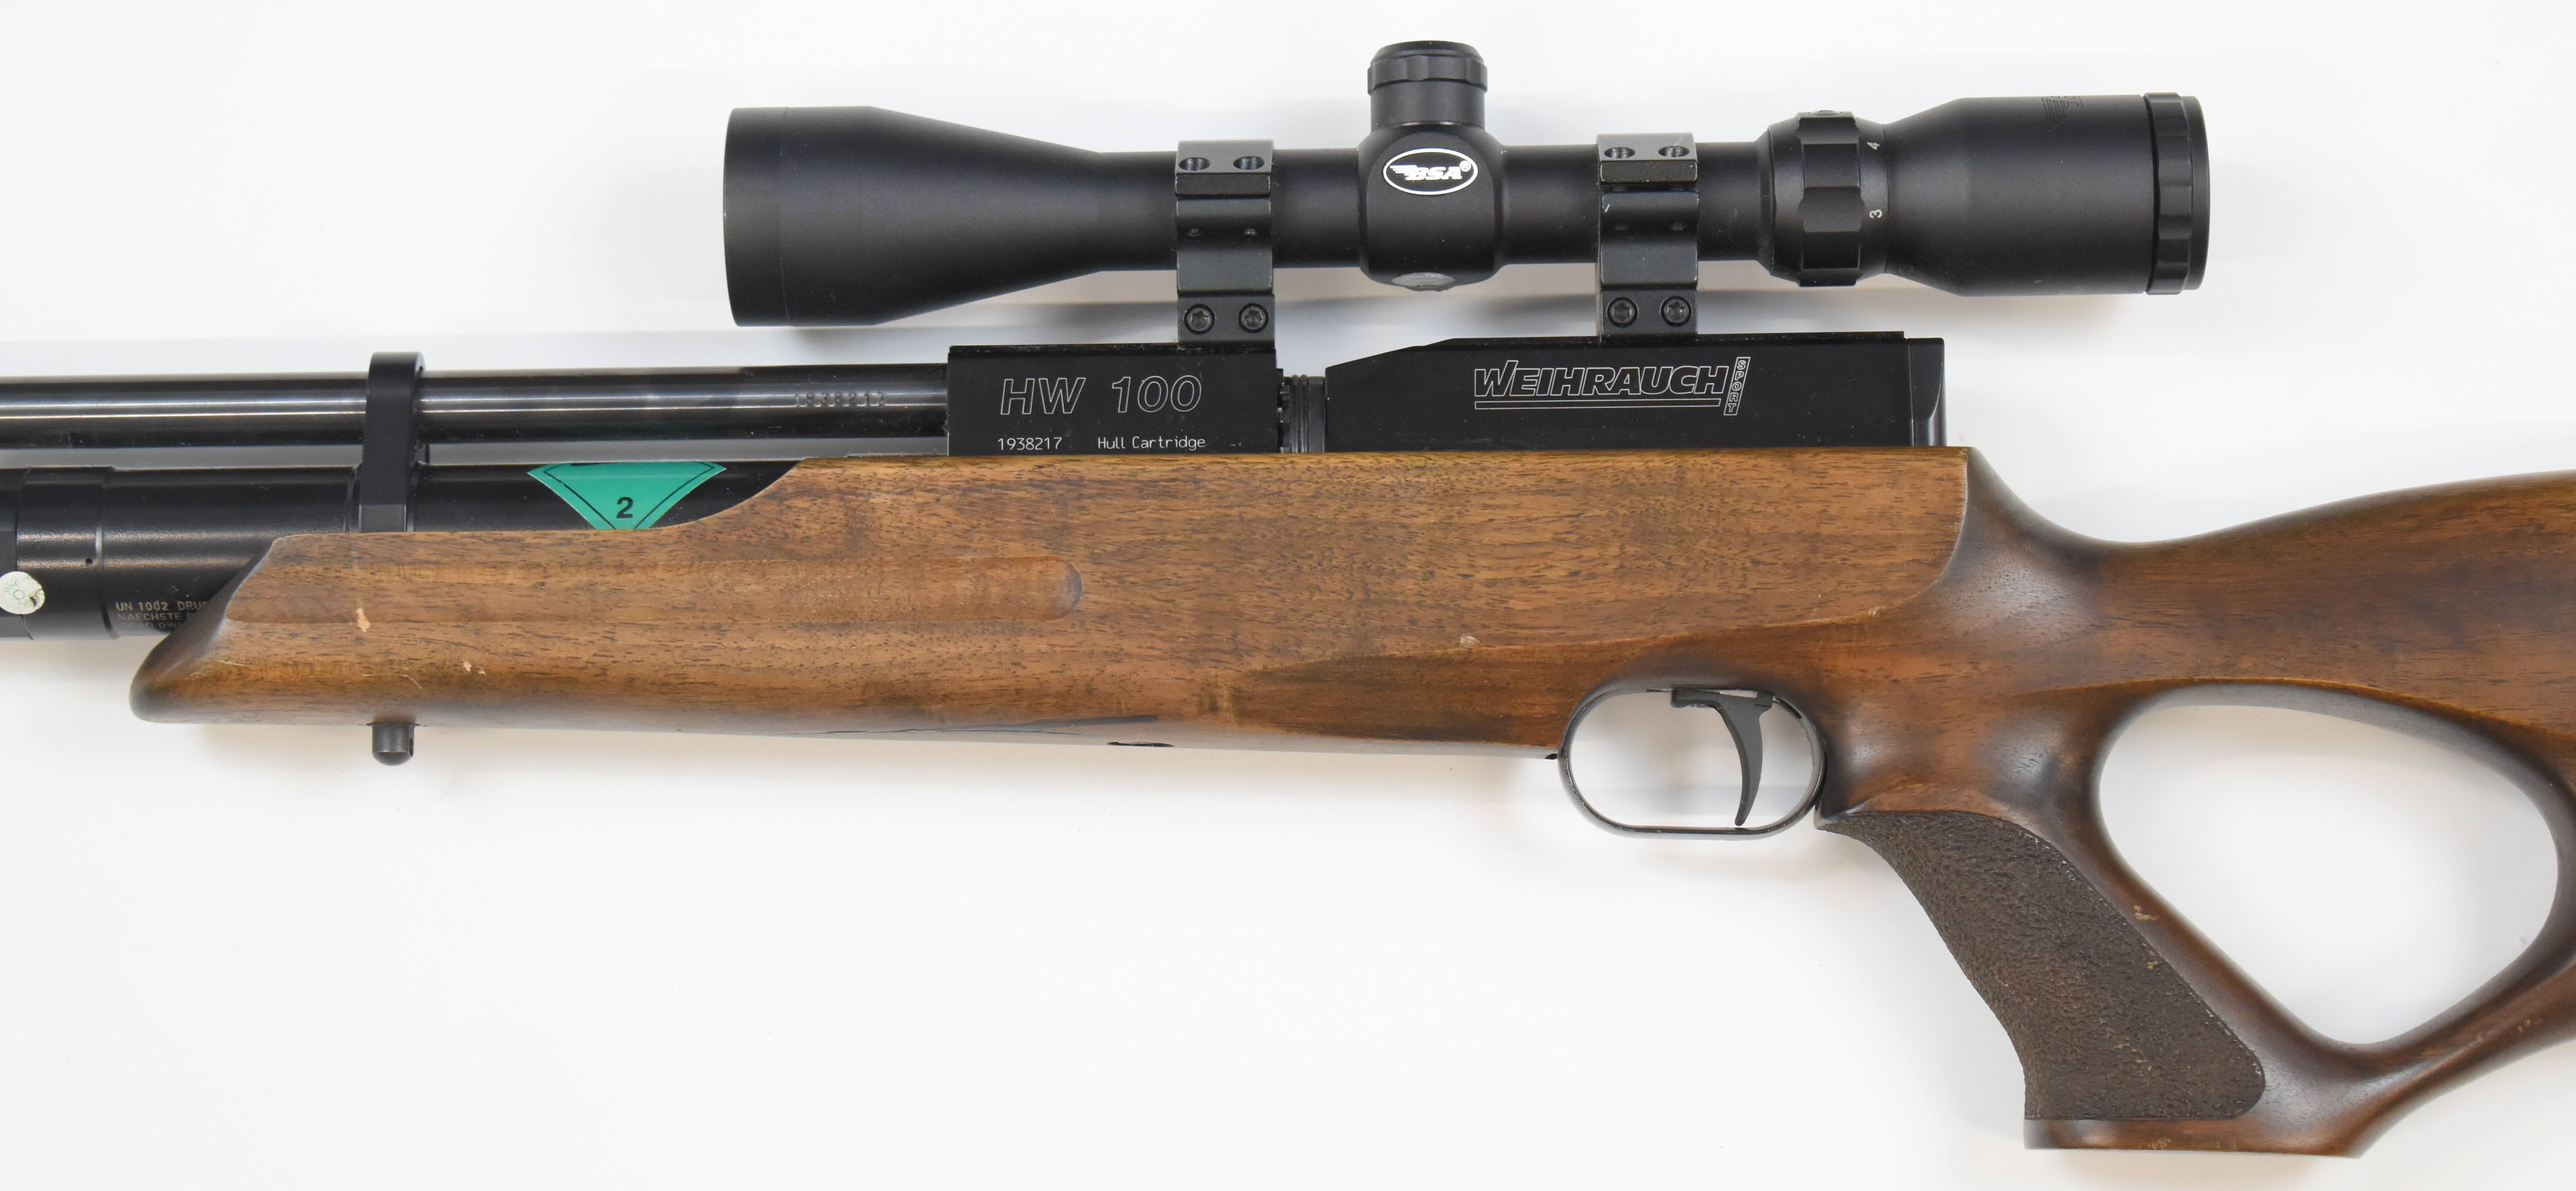 Weihrauch HW100 .22 PCP air rifle with textured semi-pistol grip, raised cheek piece, adjustable - Image 8 of 11